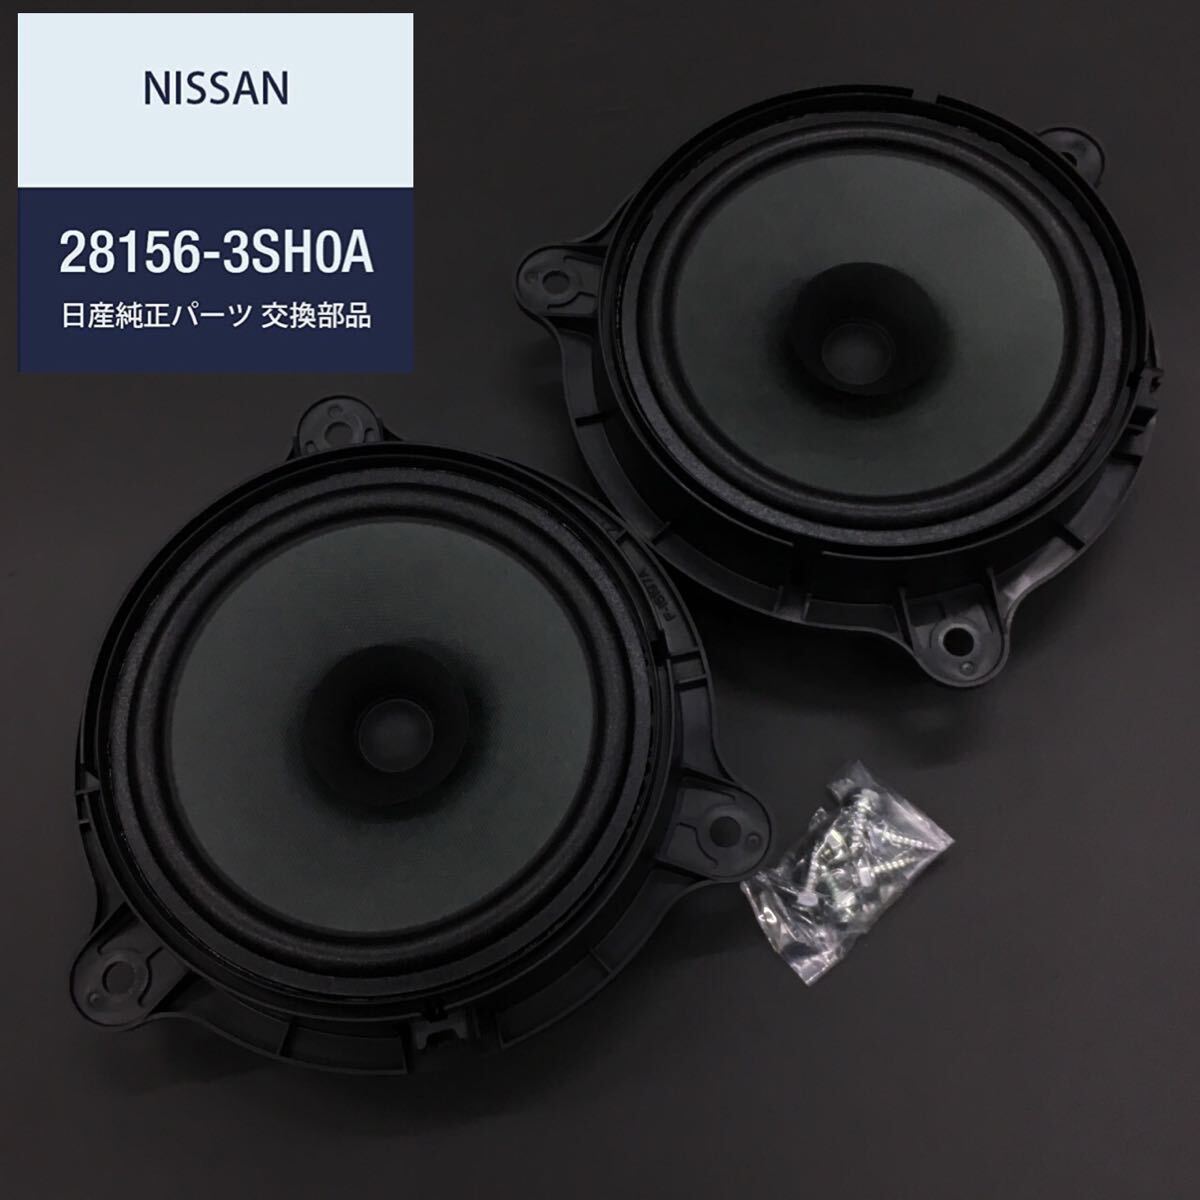 NISSAN 日産 純正部品 スピーカー ユニツト 品番28156-3SG0A 4Ω MAX40W 取り付けビス付き 新車外し_画像1